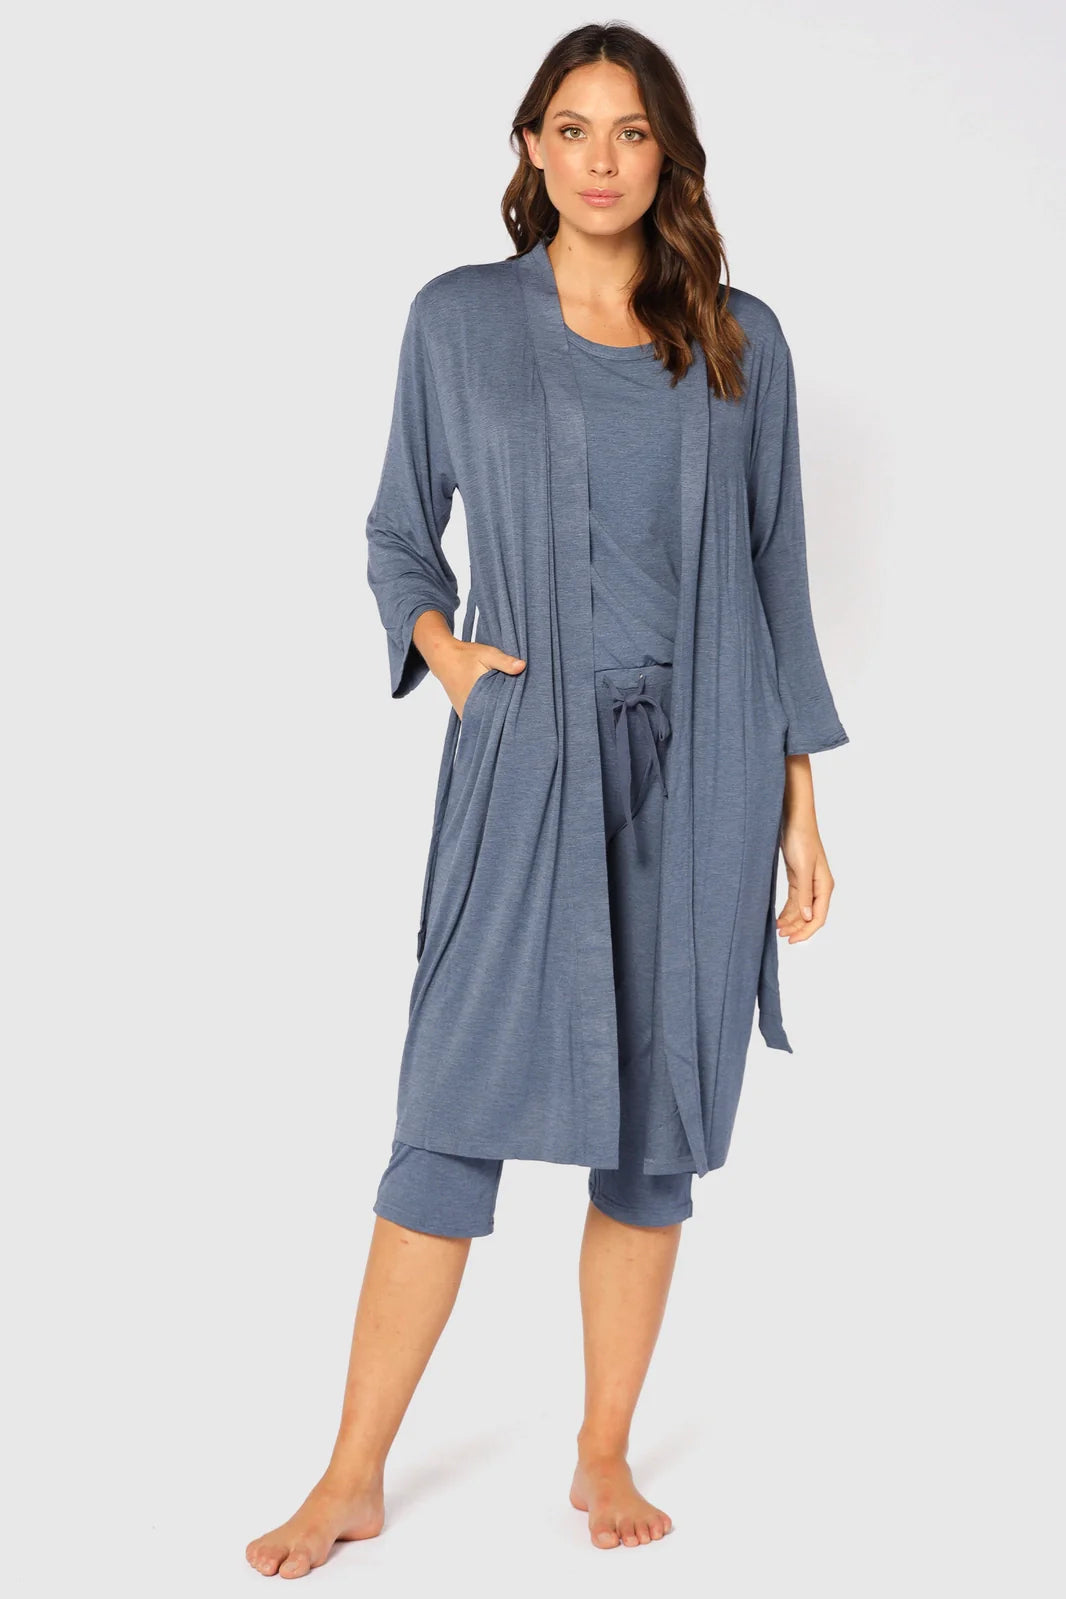 Organic Bamboo Sleepwear Robe Robe from Bamboo Body maternity online store brisbane sydney perth australia